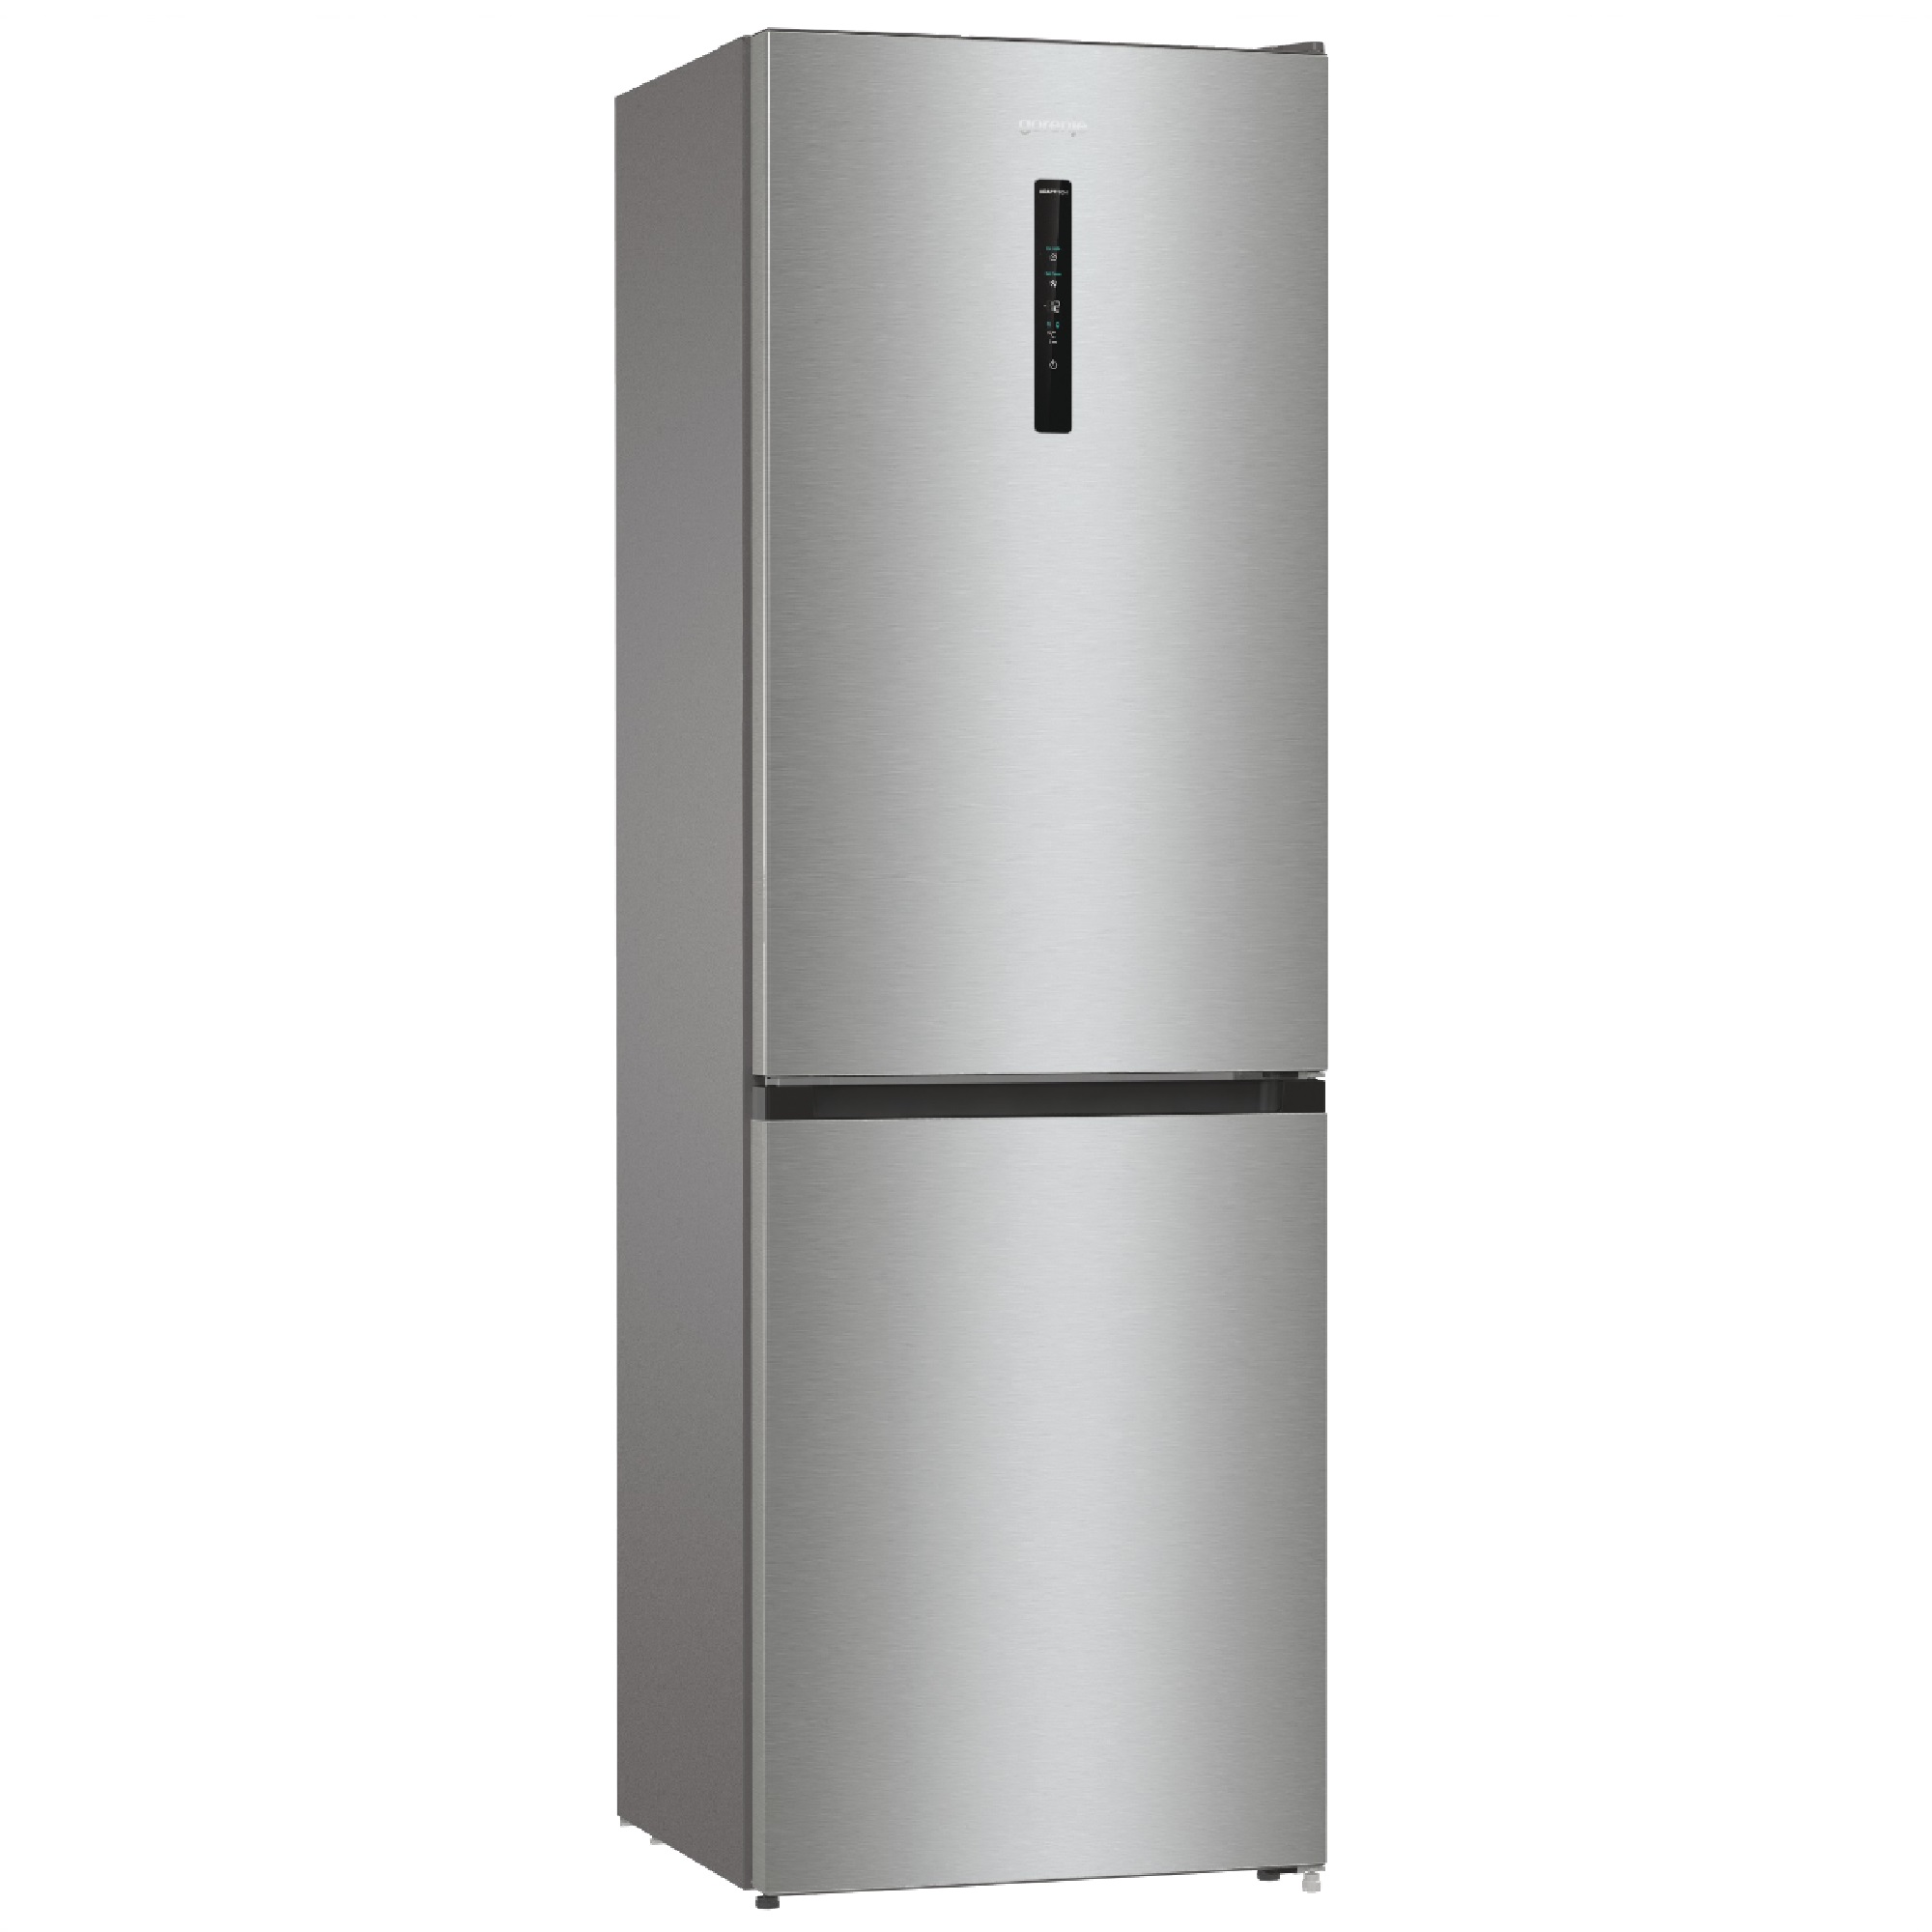 М видео холодильники ноу фрост. LG ga-b419slul. Холодильник LG ga-b419sdjl графит. Холодильник LG ga-b379slul. Холодильник LG ga-b419slul.